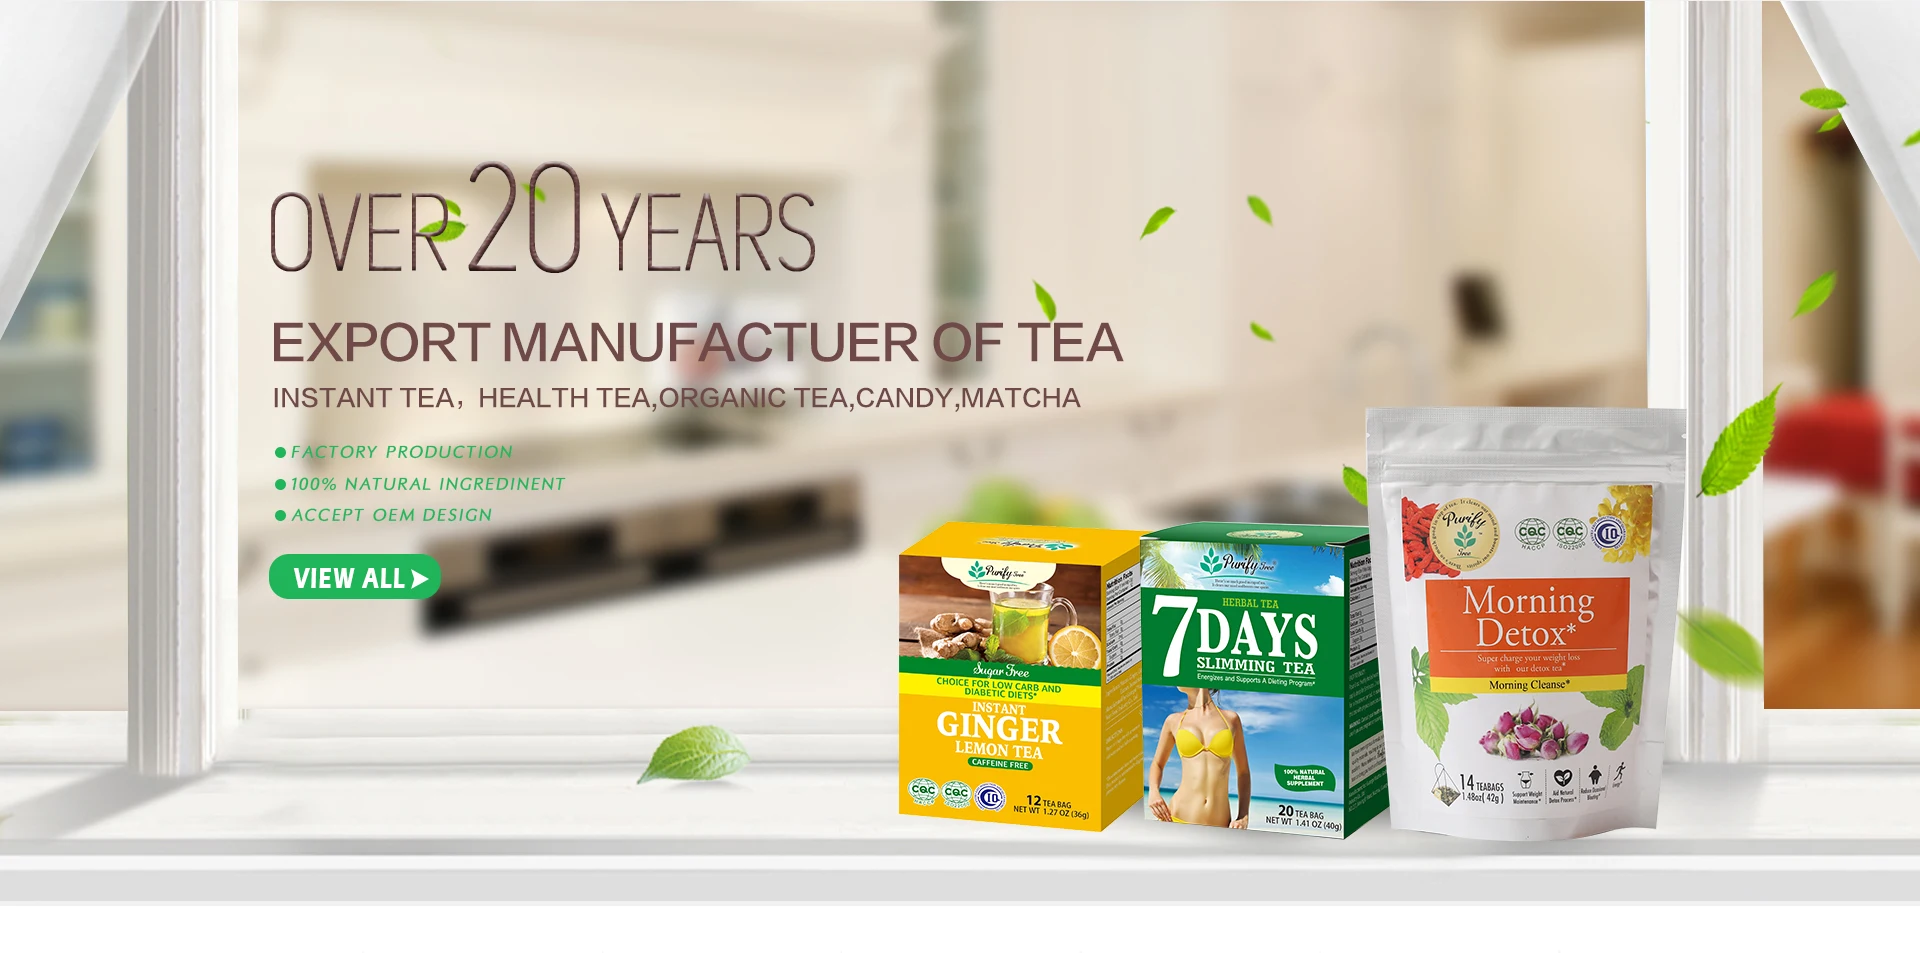 slimming tea obiectiv global)